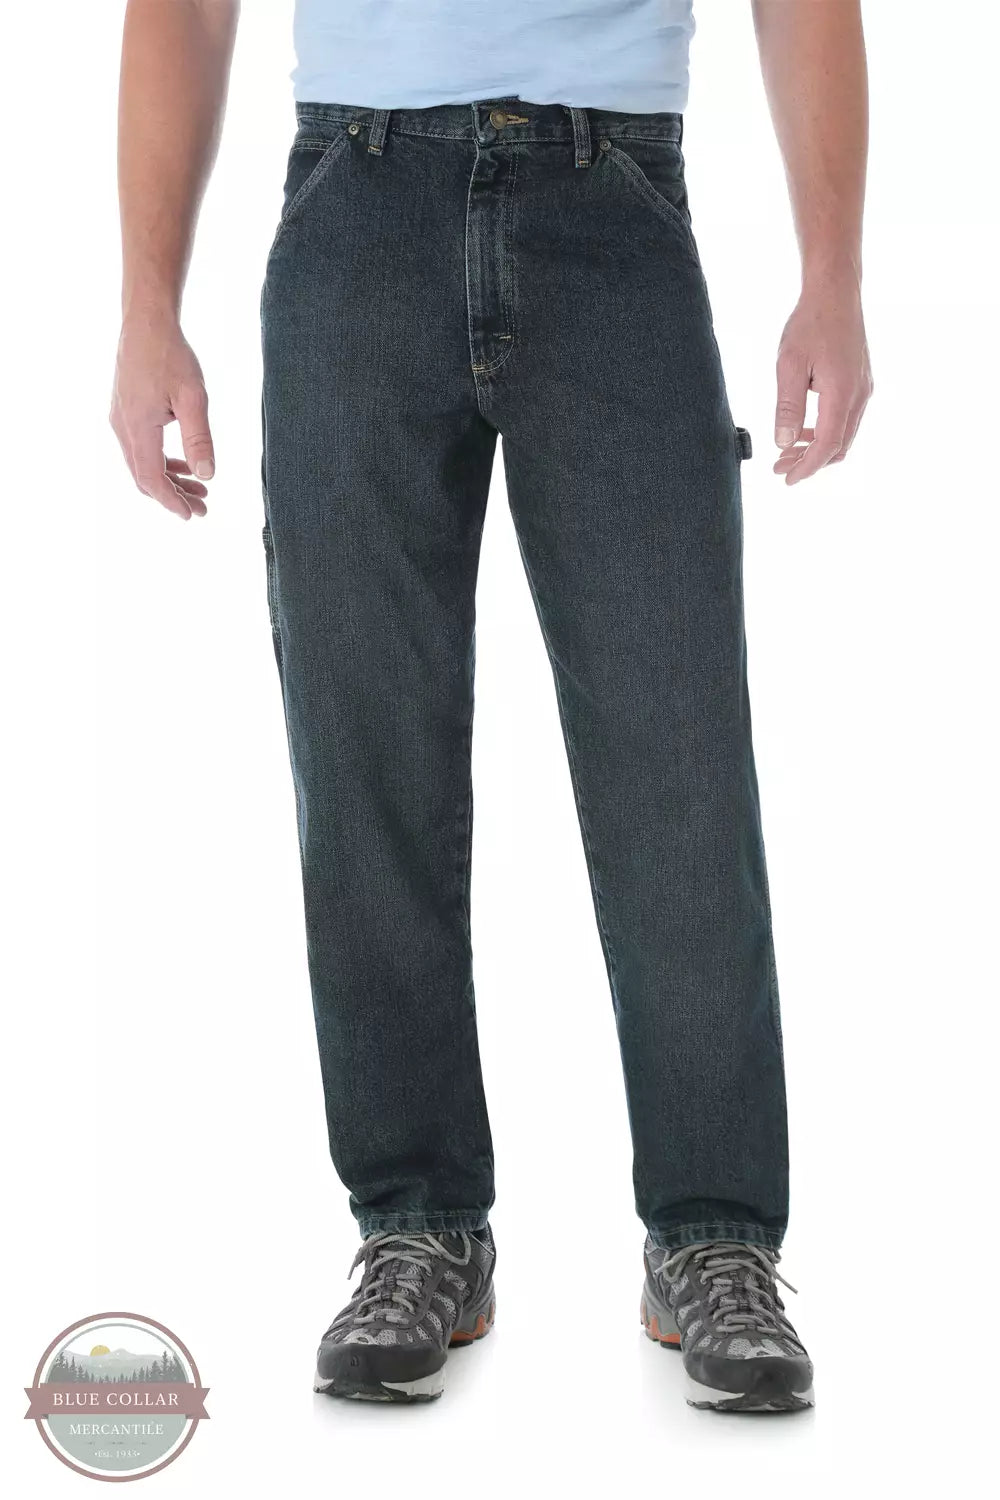 Wrangler 32001DK Rugged Wear Carpenter Jean in Dark Quartz Front View